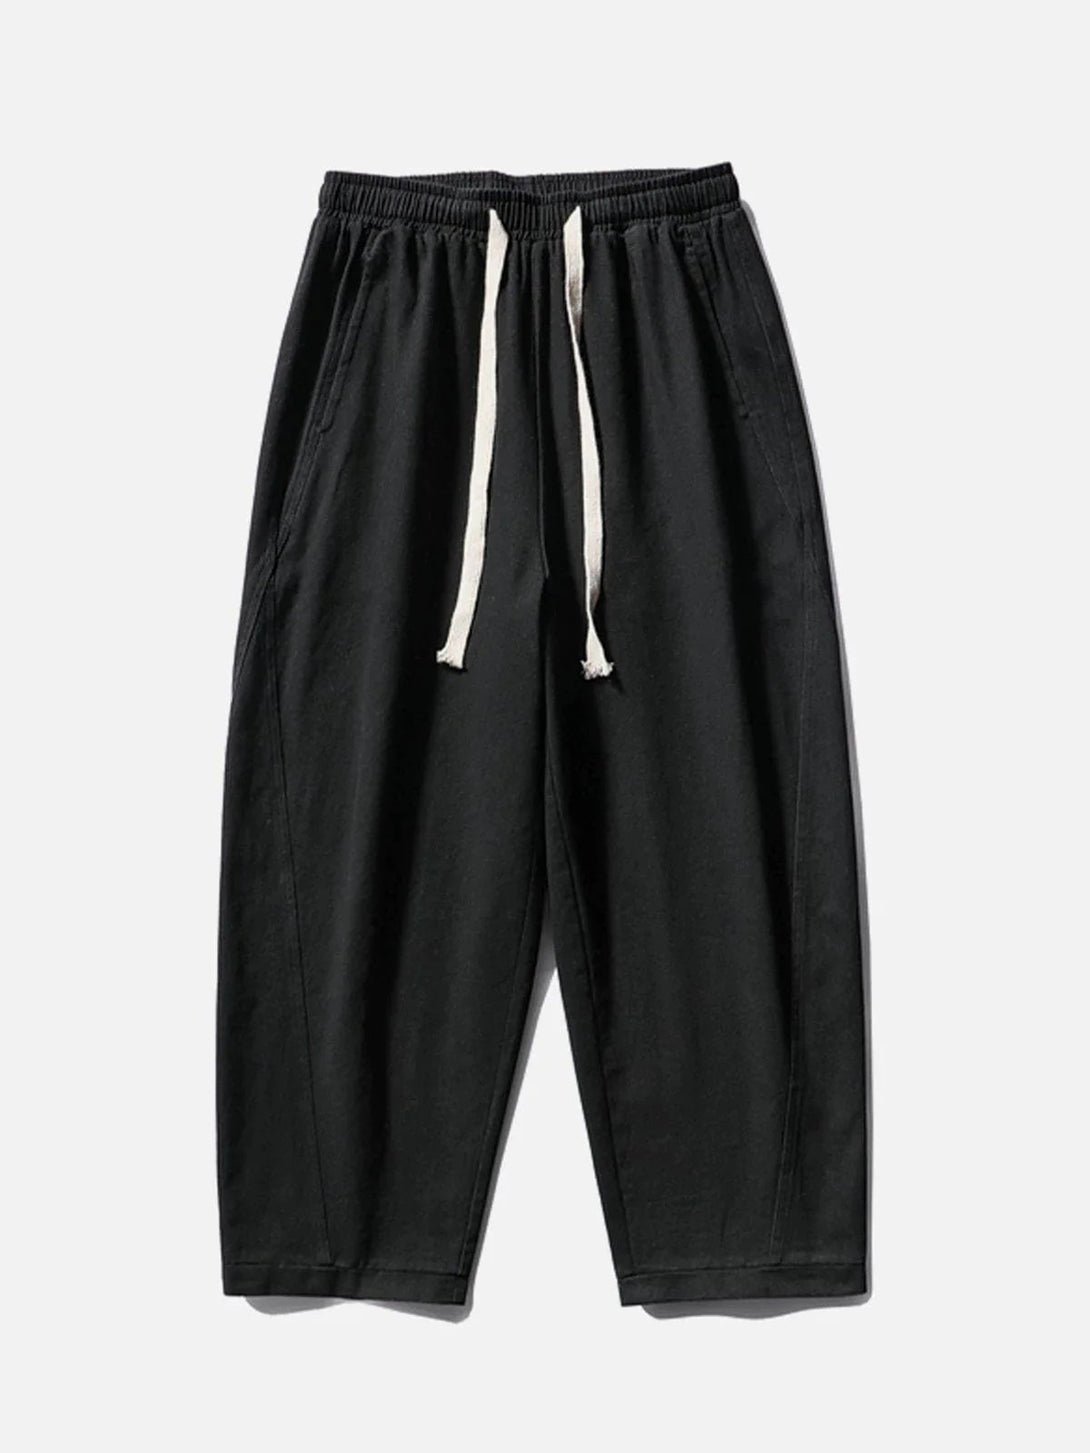 Majesda® - Solid Minimalist Drawstring Pants outfit ideas streetwear fashion